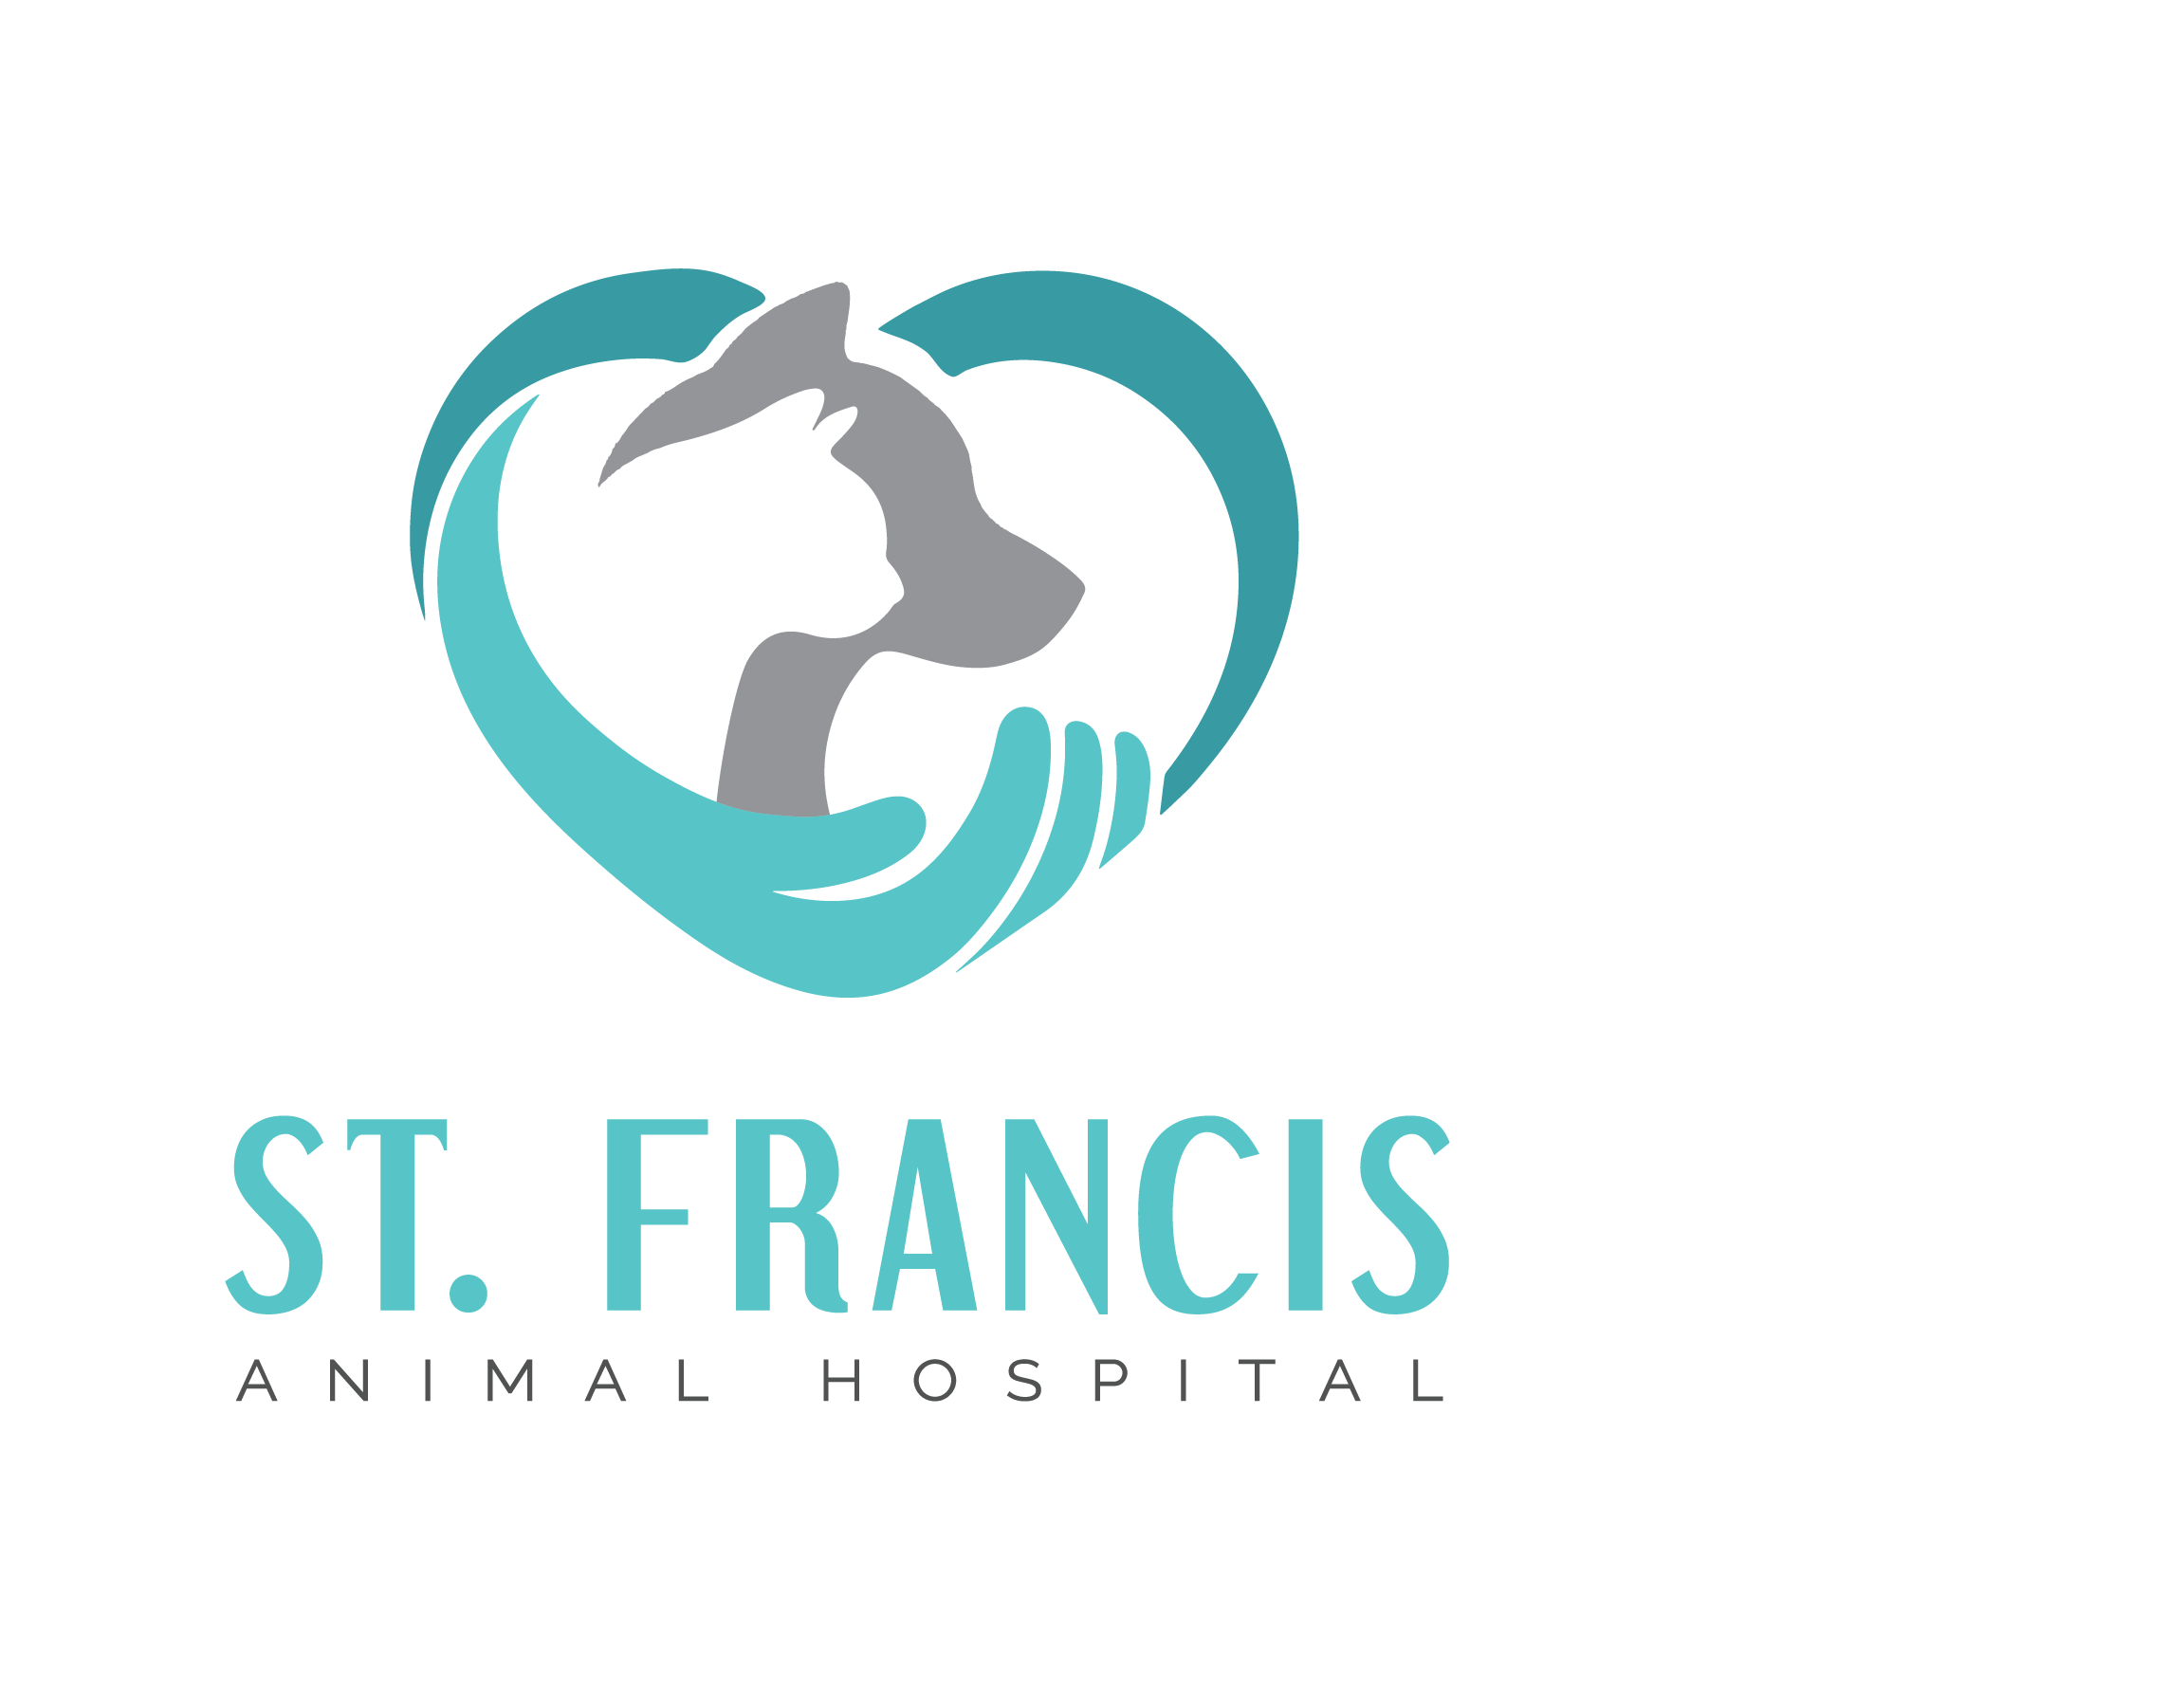 St. Francis Animal Hospital